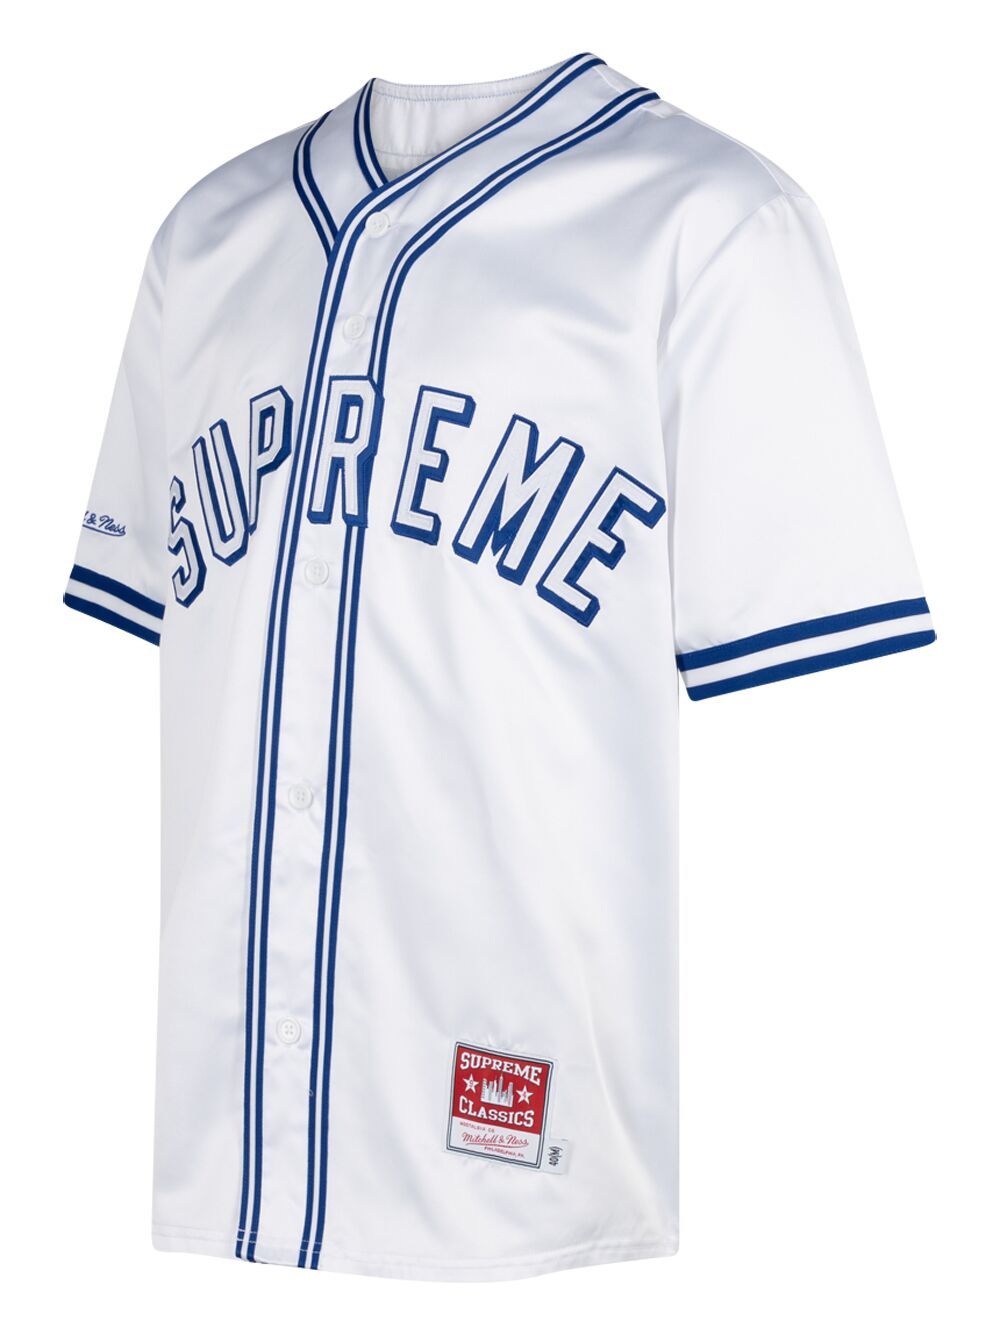 Supreme Men's Patches Denim Baseball Jersey